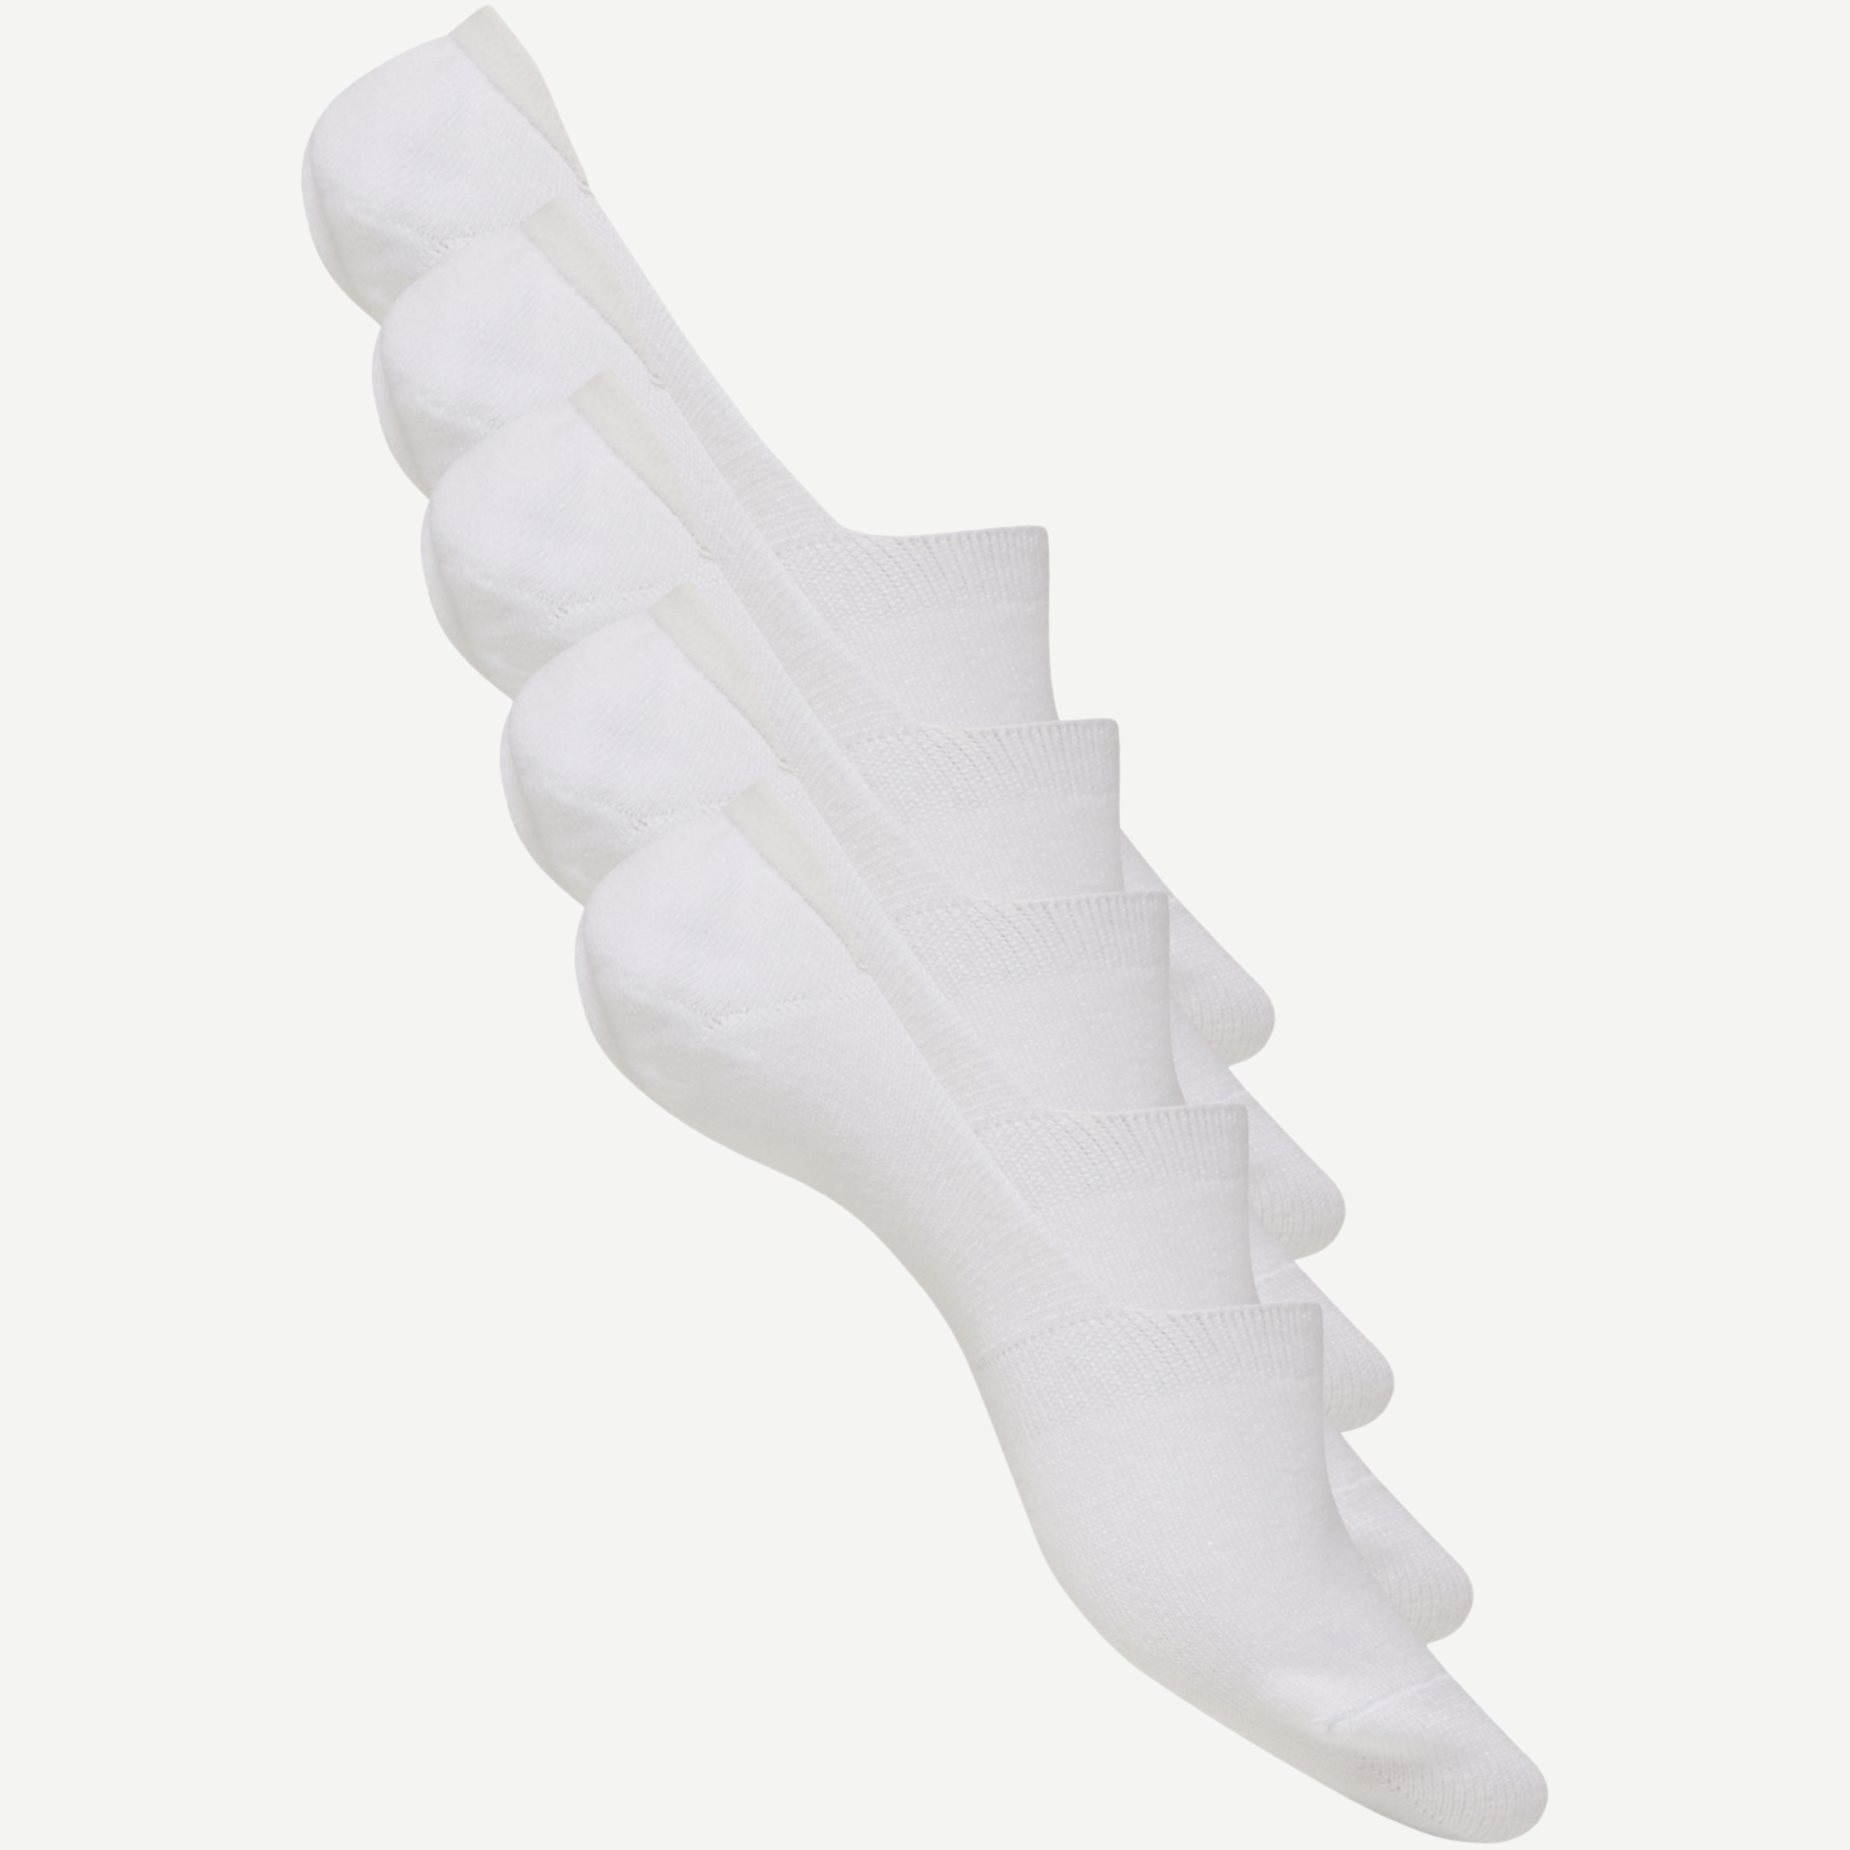 URBAN QUEST Socks 1431 5-PACK BAMBOO NO SHOW SOCKS White